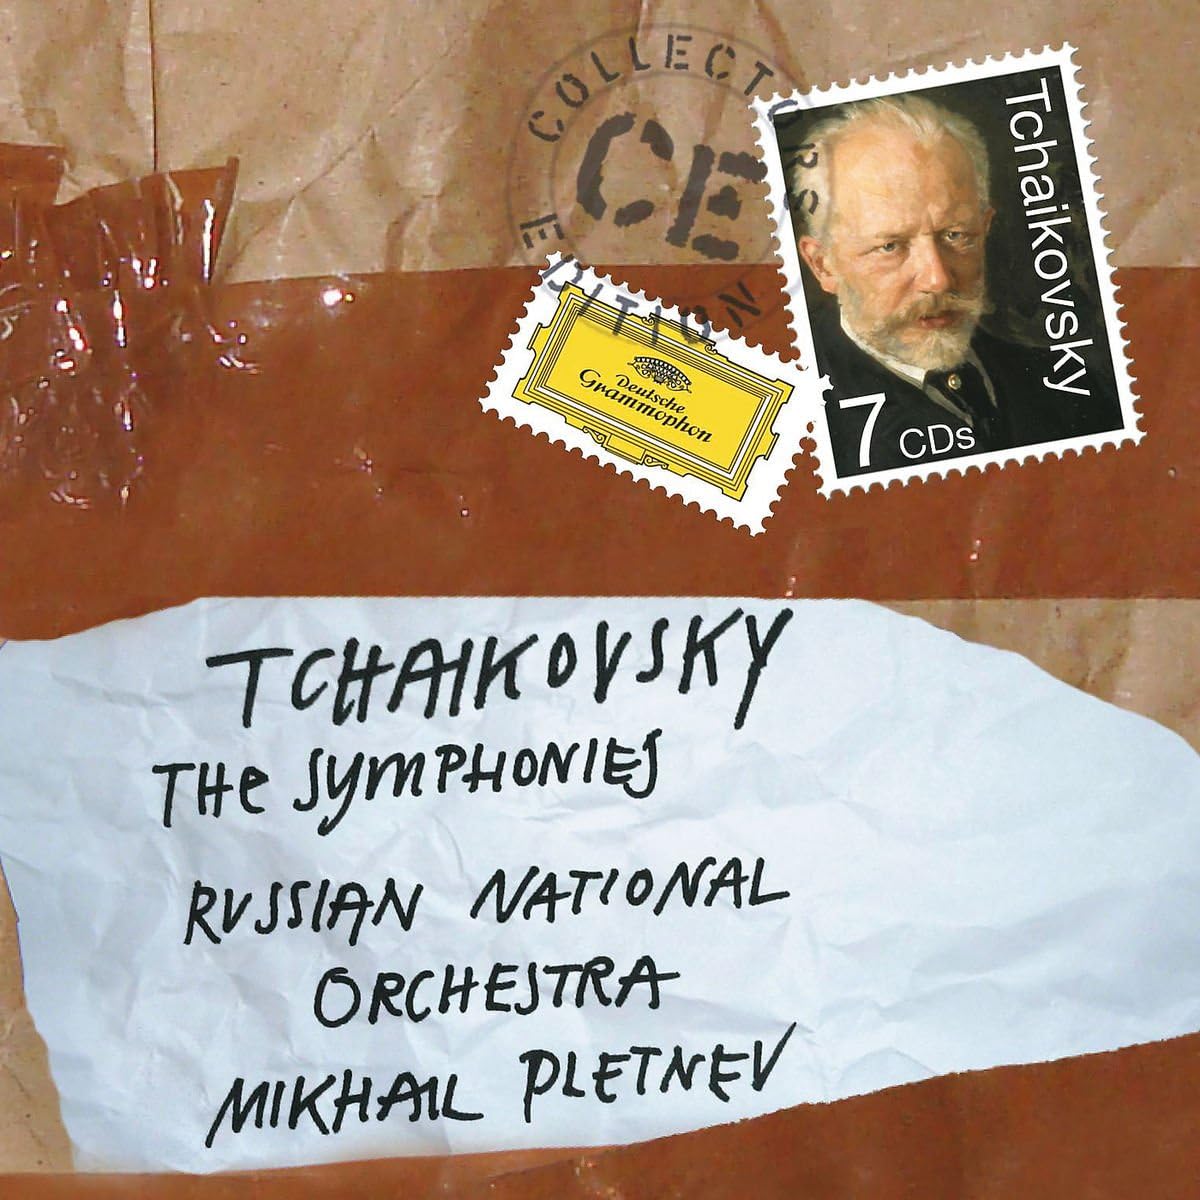 Tchaikovsky: The Symphonies | Russian National Orchestra, Mikhail Pletnev